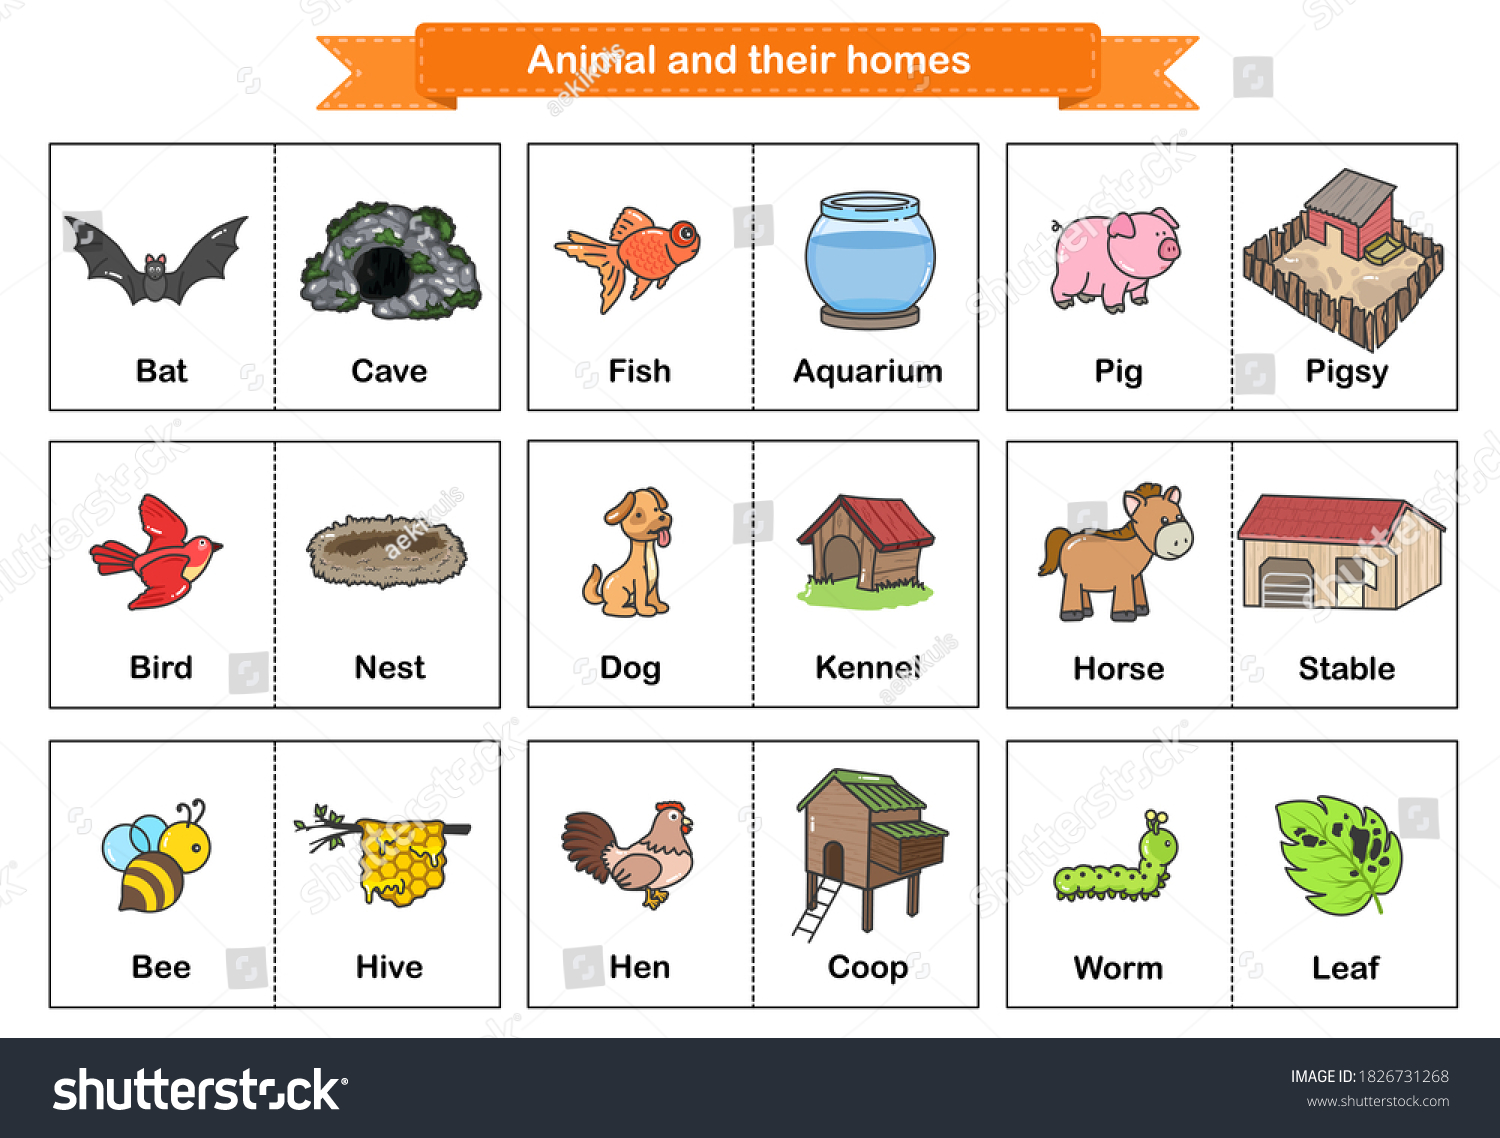 49,819 Teaching animals Images, Stock Photos & Vectors | Shutterstock